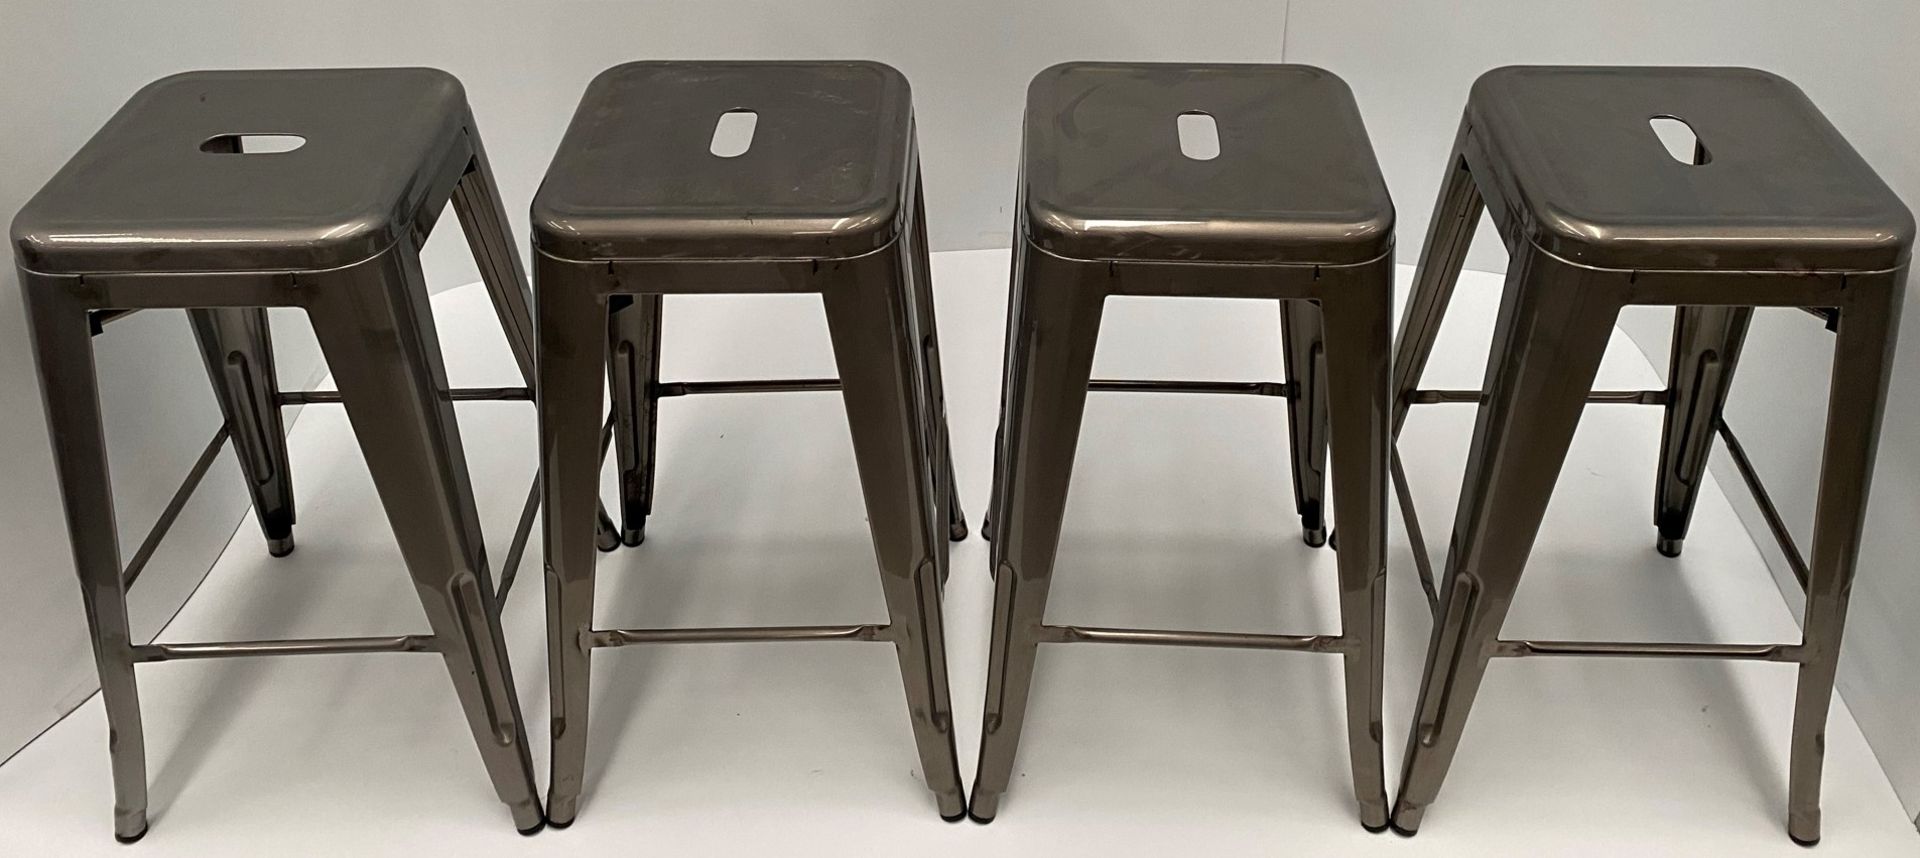 4 x brushed metal transparent high bar stools 675mm (1 outer box)